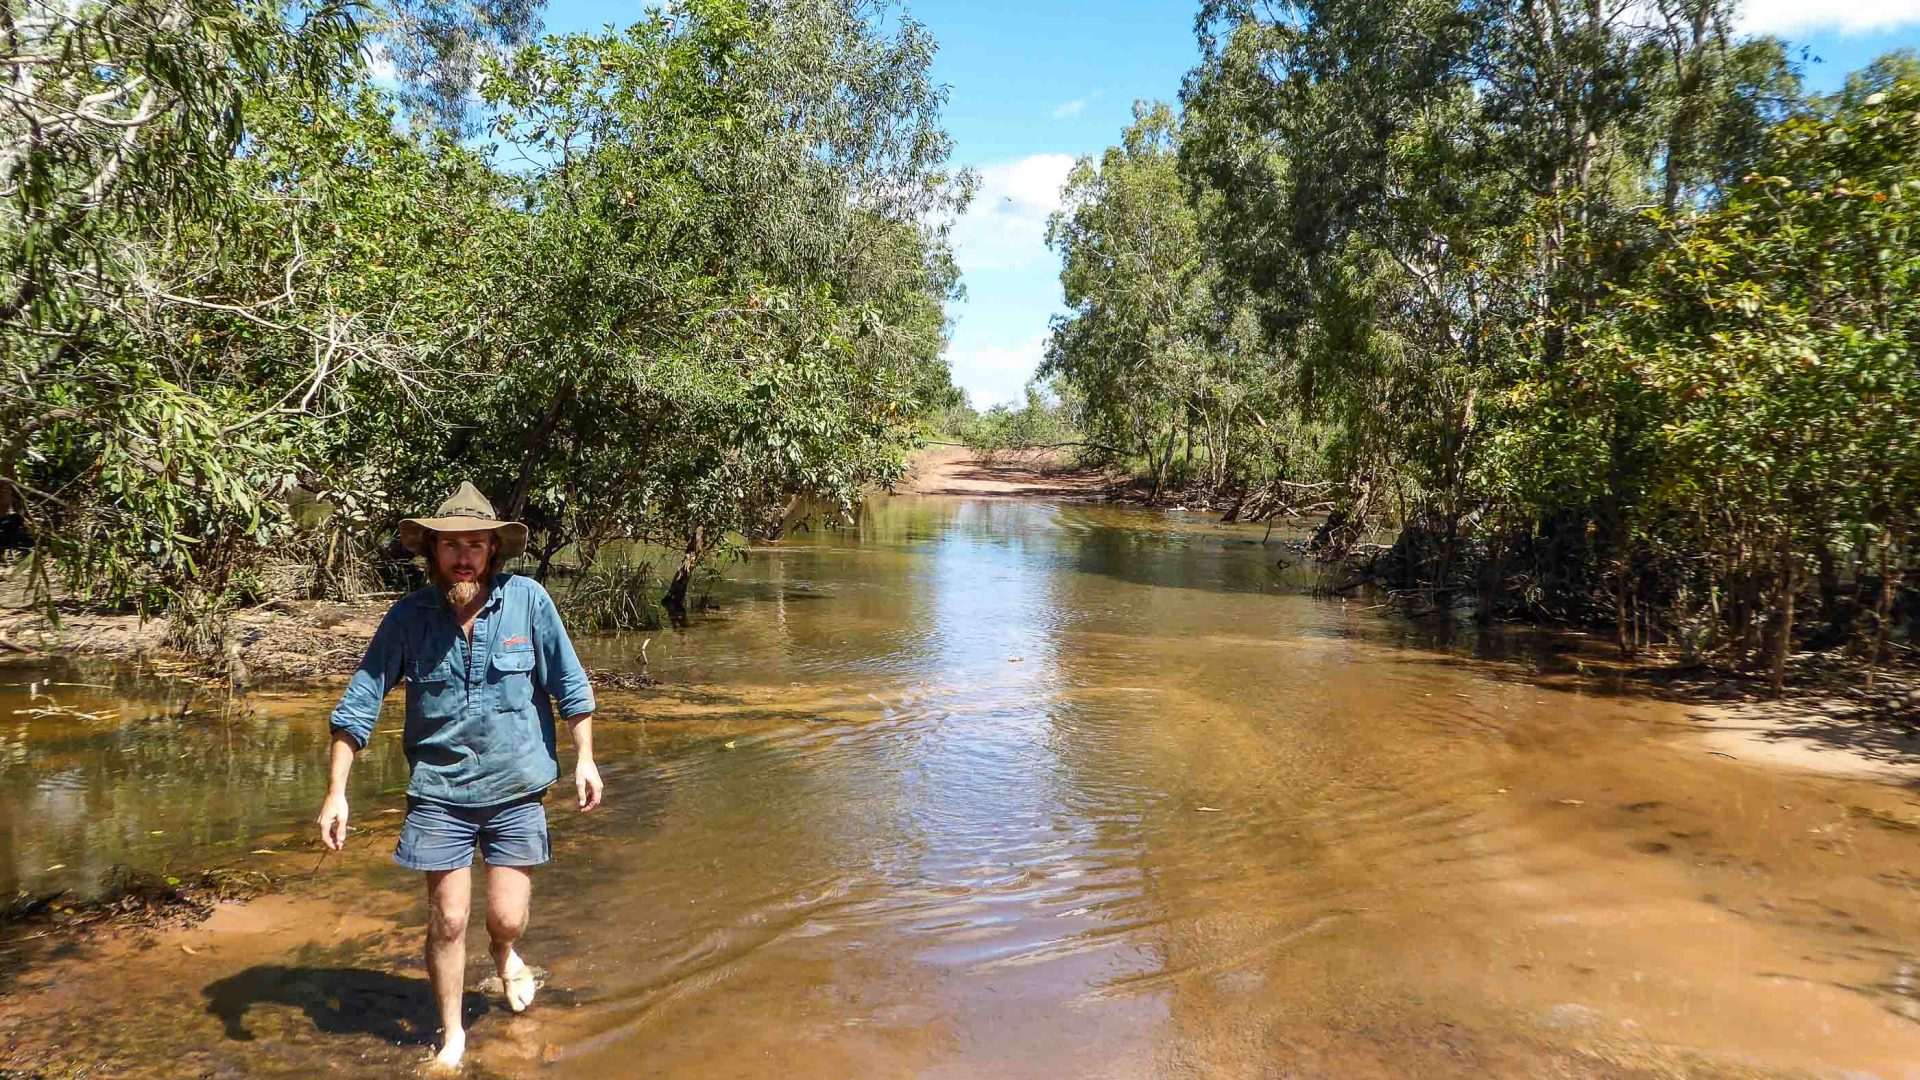 Walking through the river on the road to the Cobourg Peninsula, Australia.